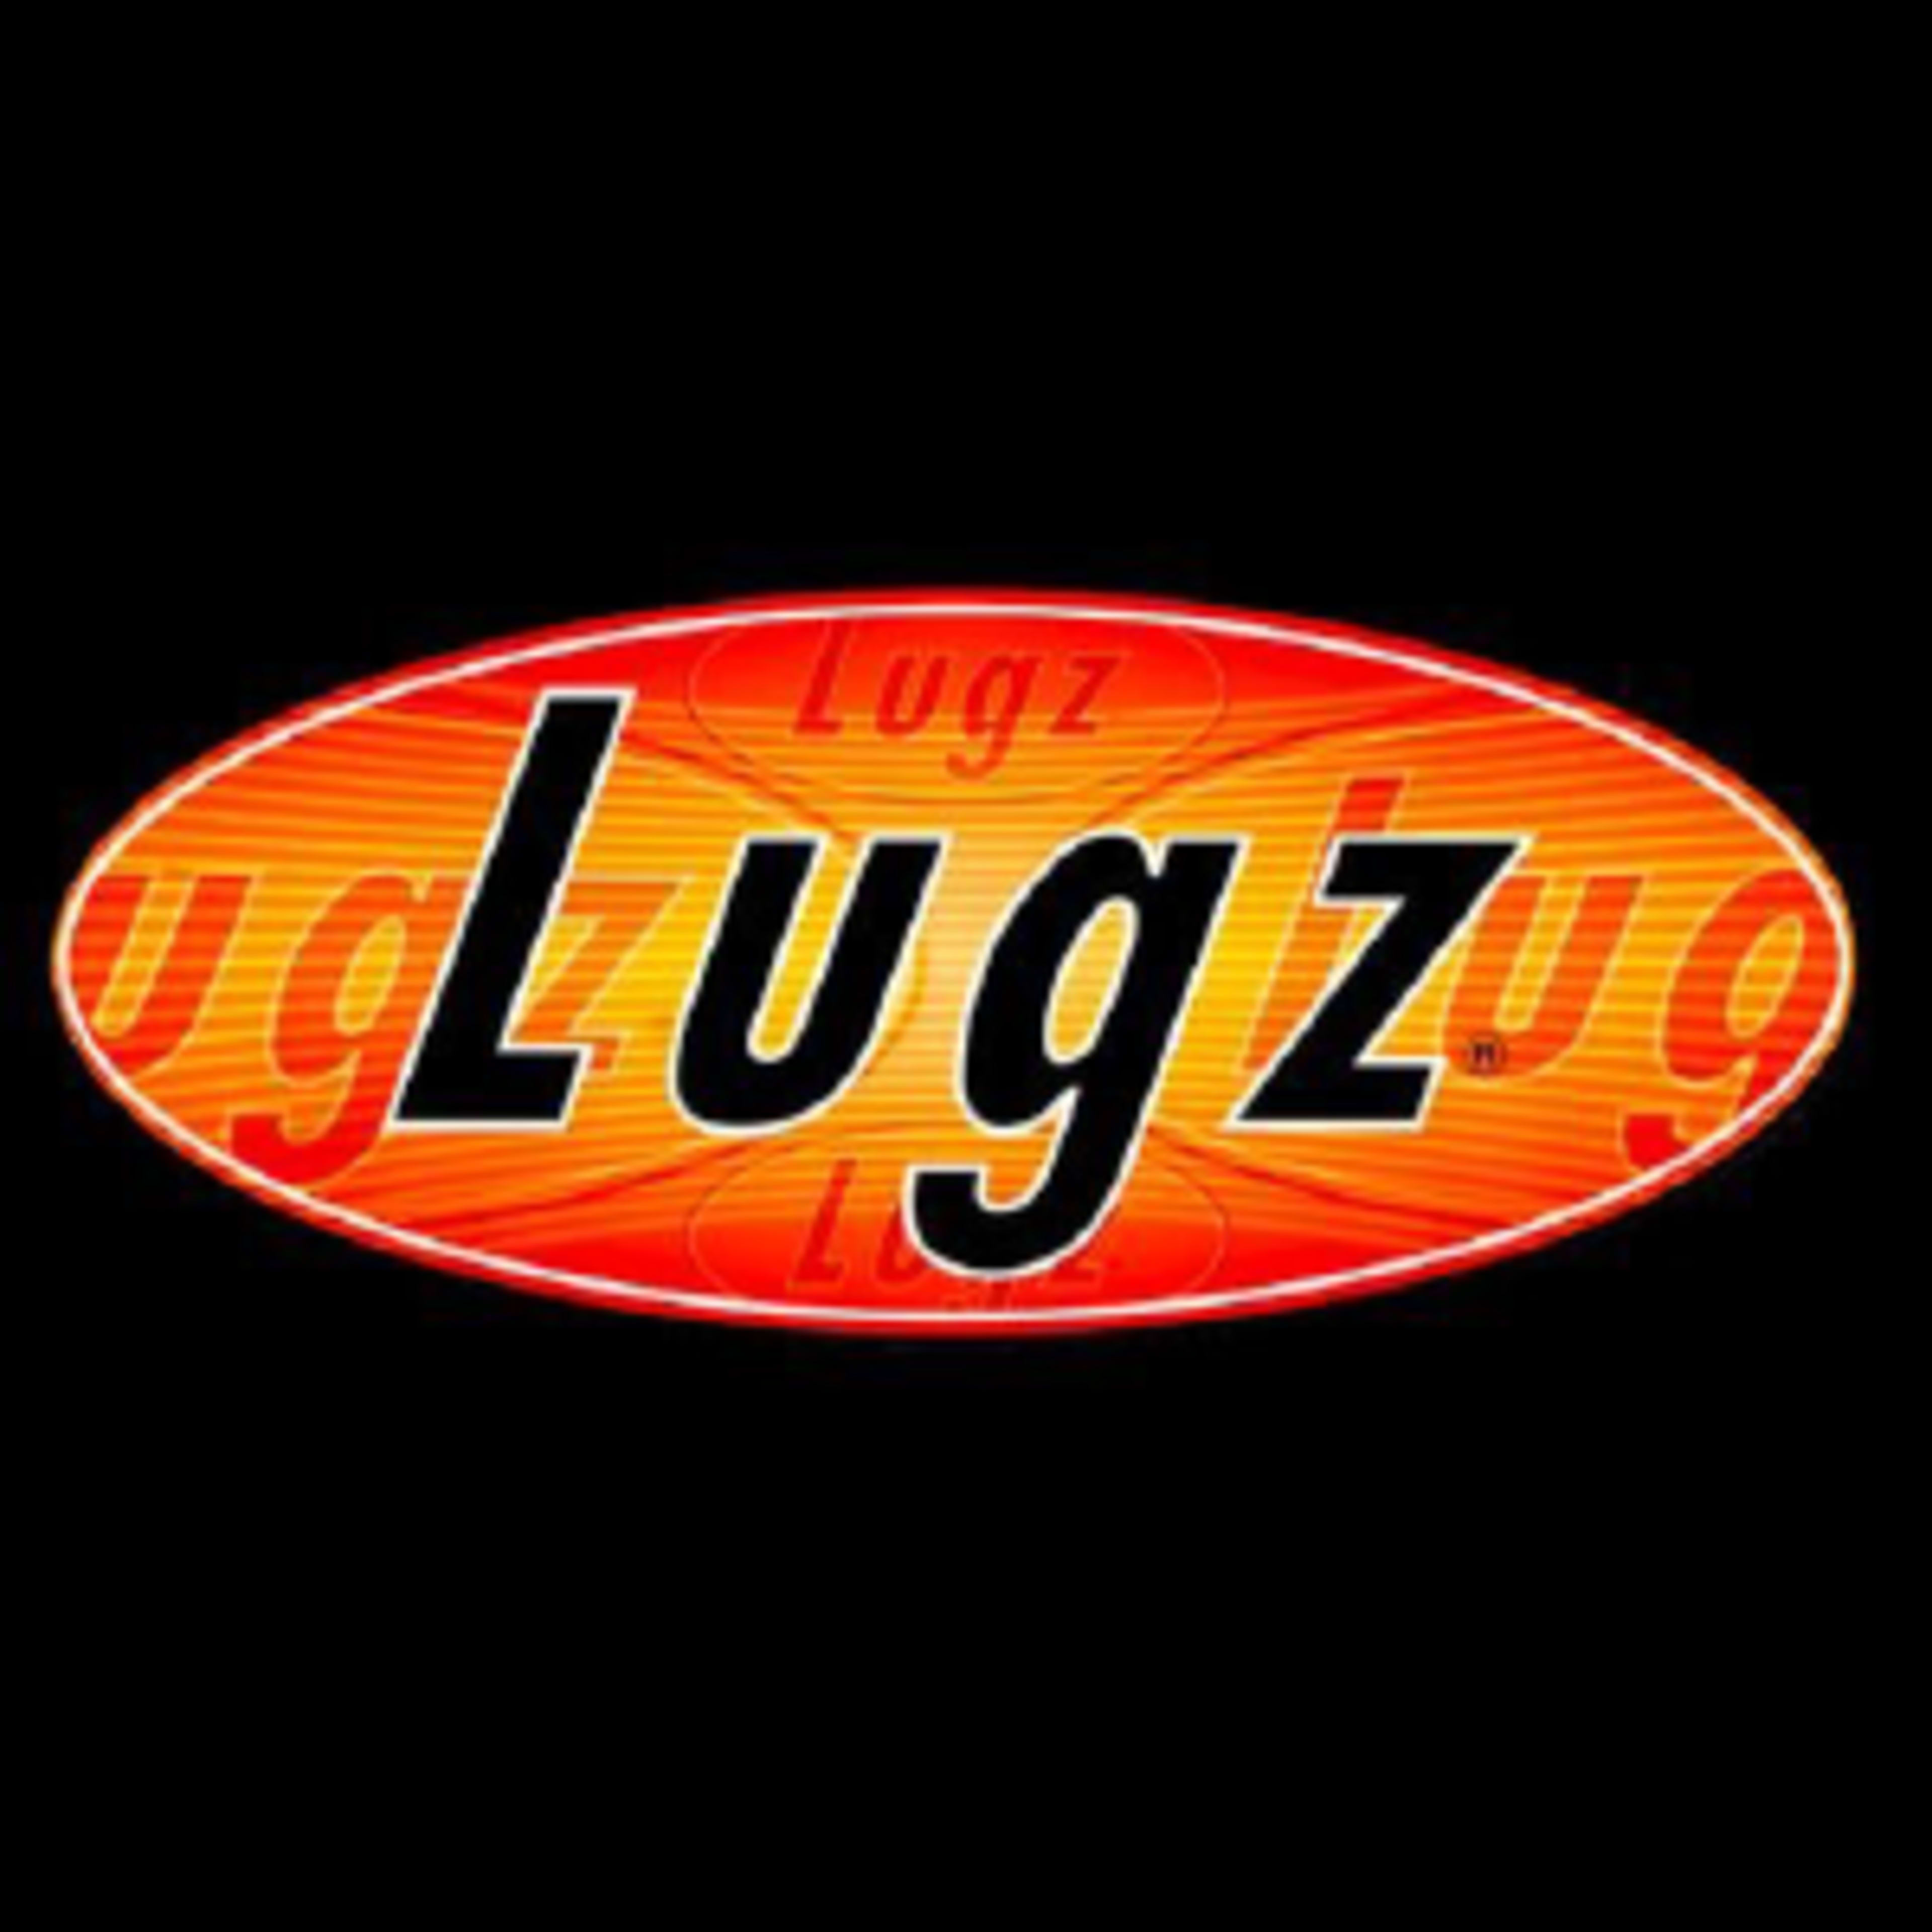 Lugz Code